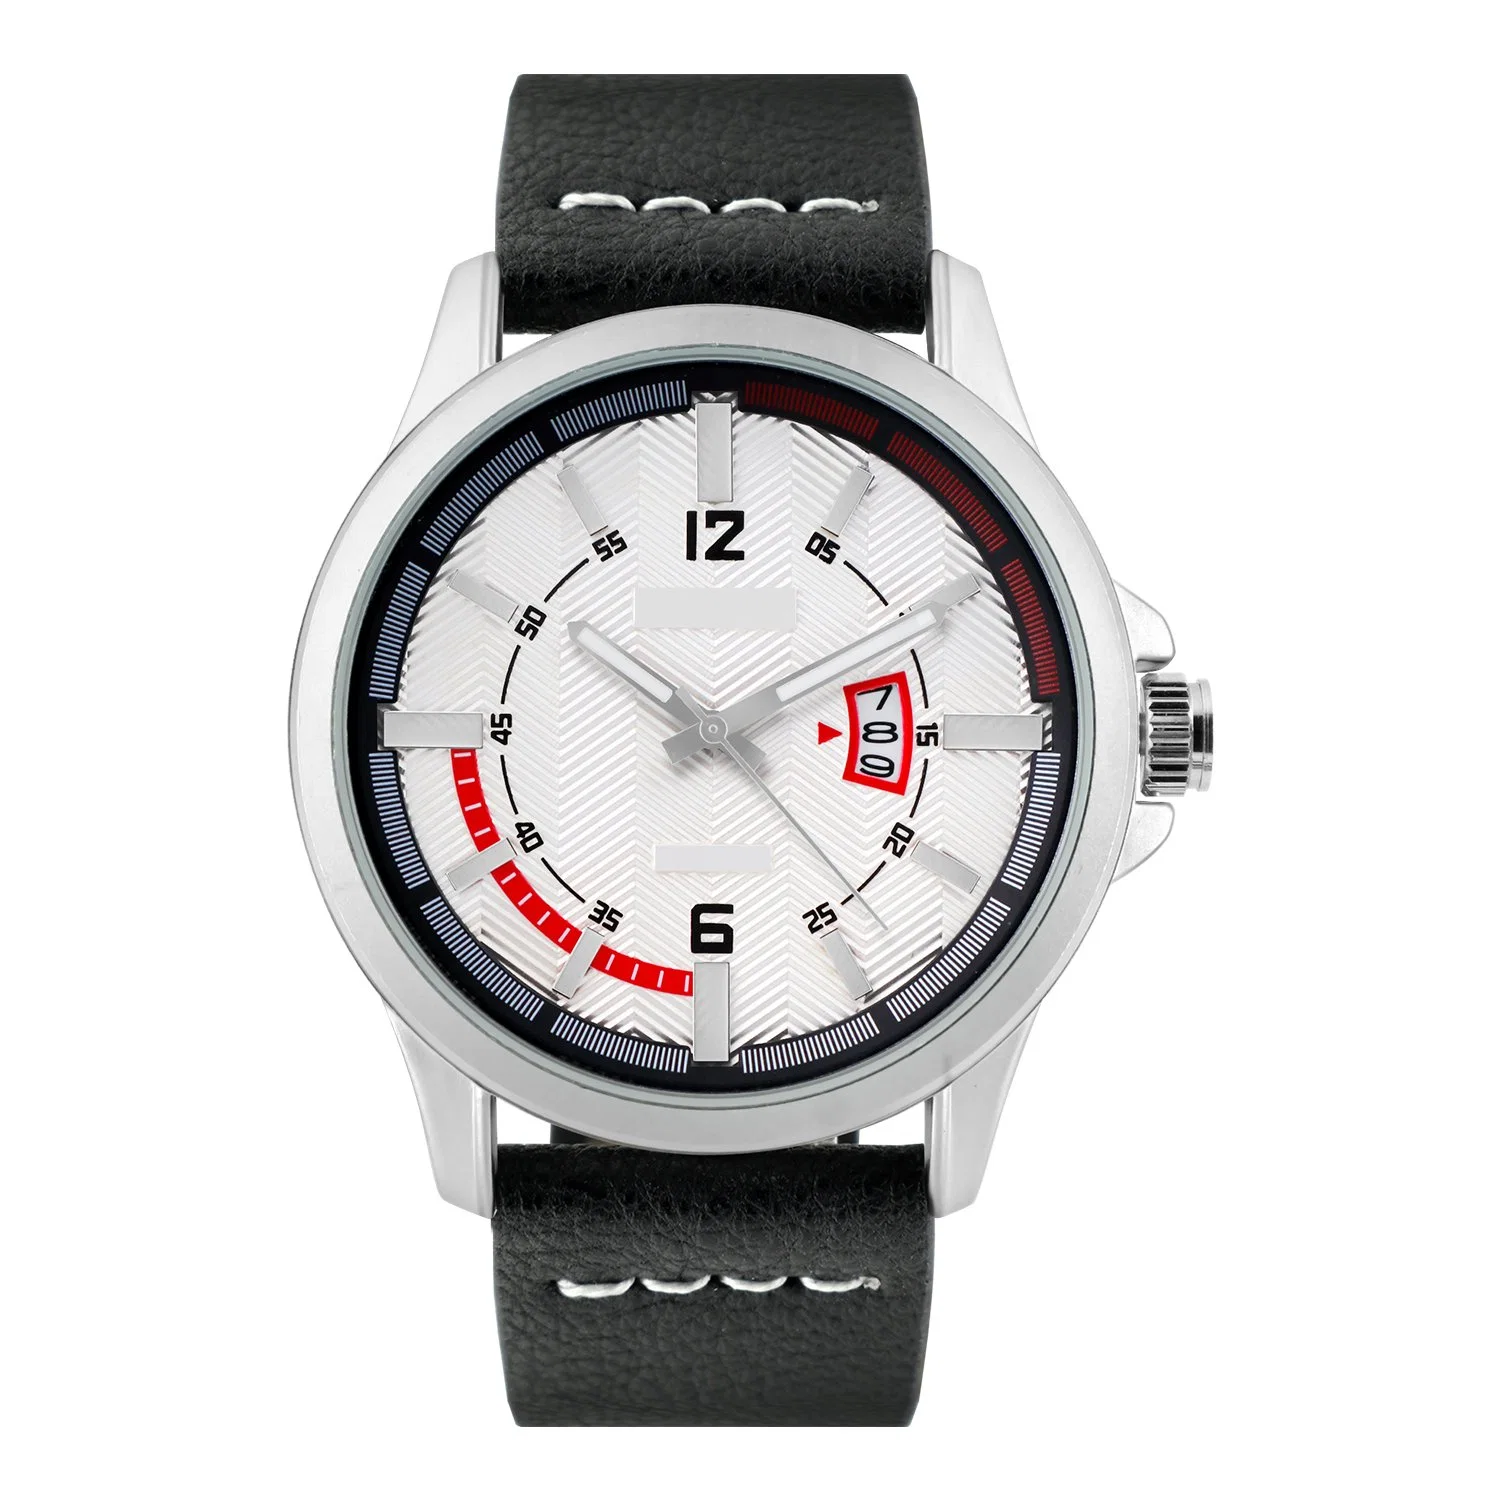 Watches Men Mens Fashion Watches Digital Watch Gift Quality Watches Quartz Custome Wholesale Sports Watch Wrist Watch